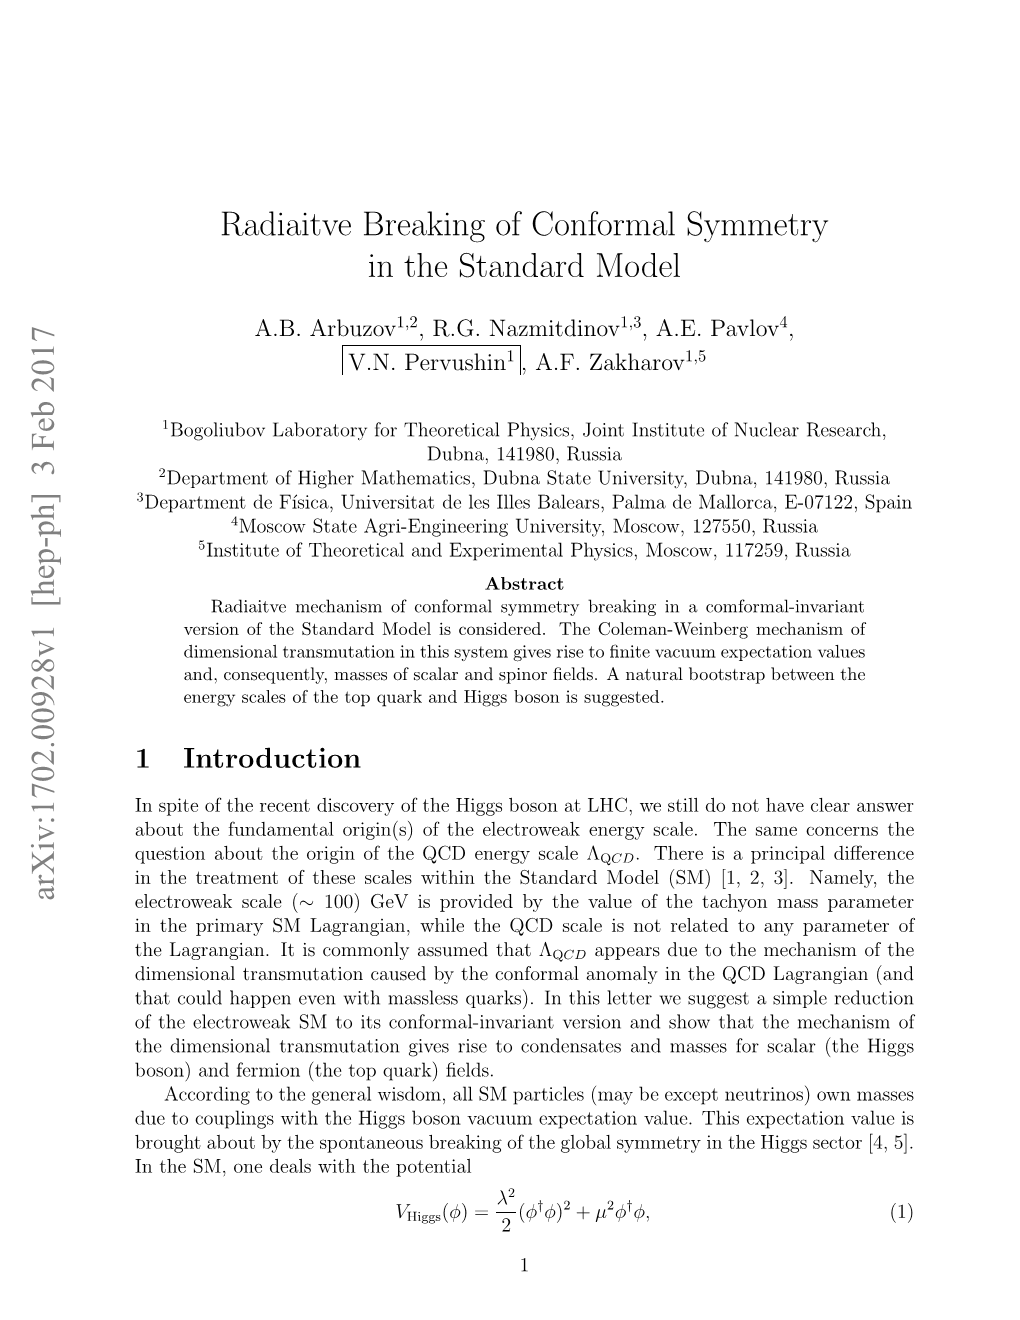 Radiaitve Breaking of Conformal Symmetry in the Standard Model